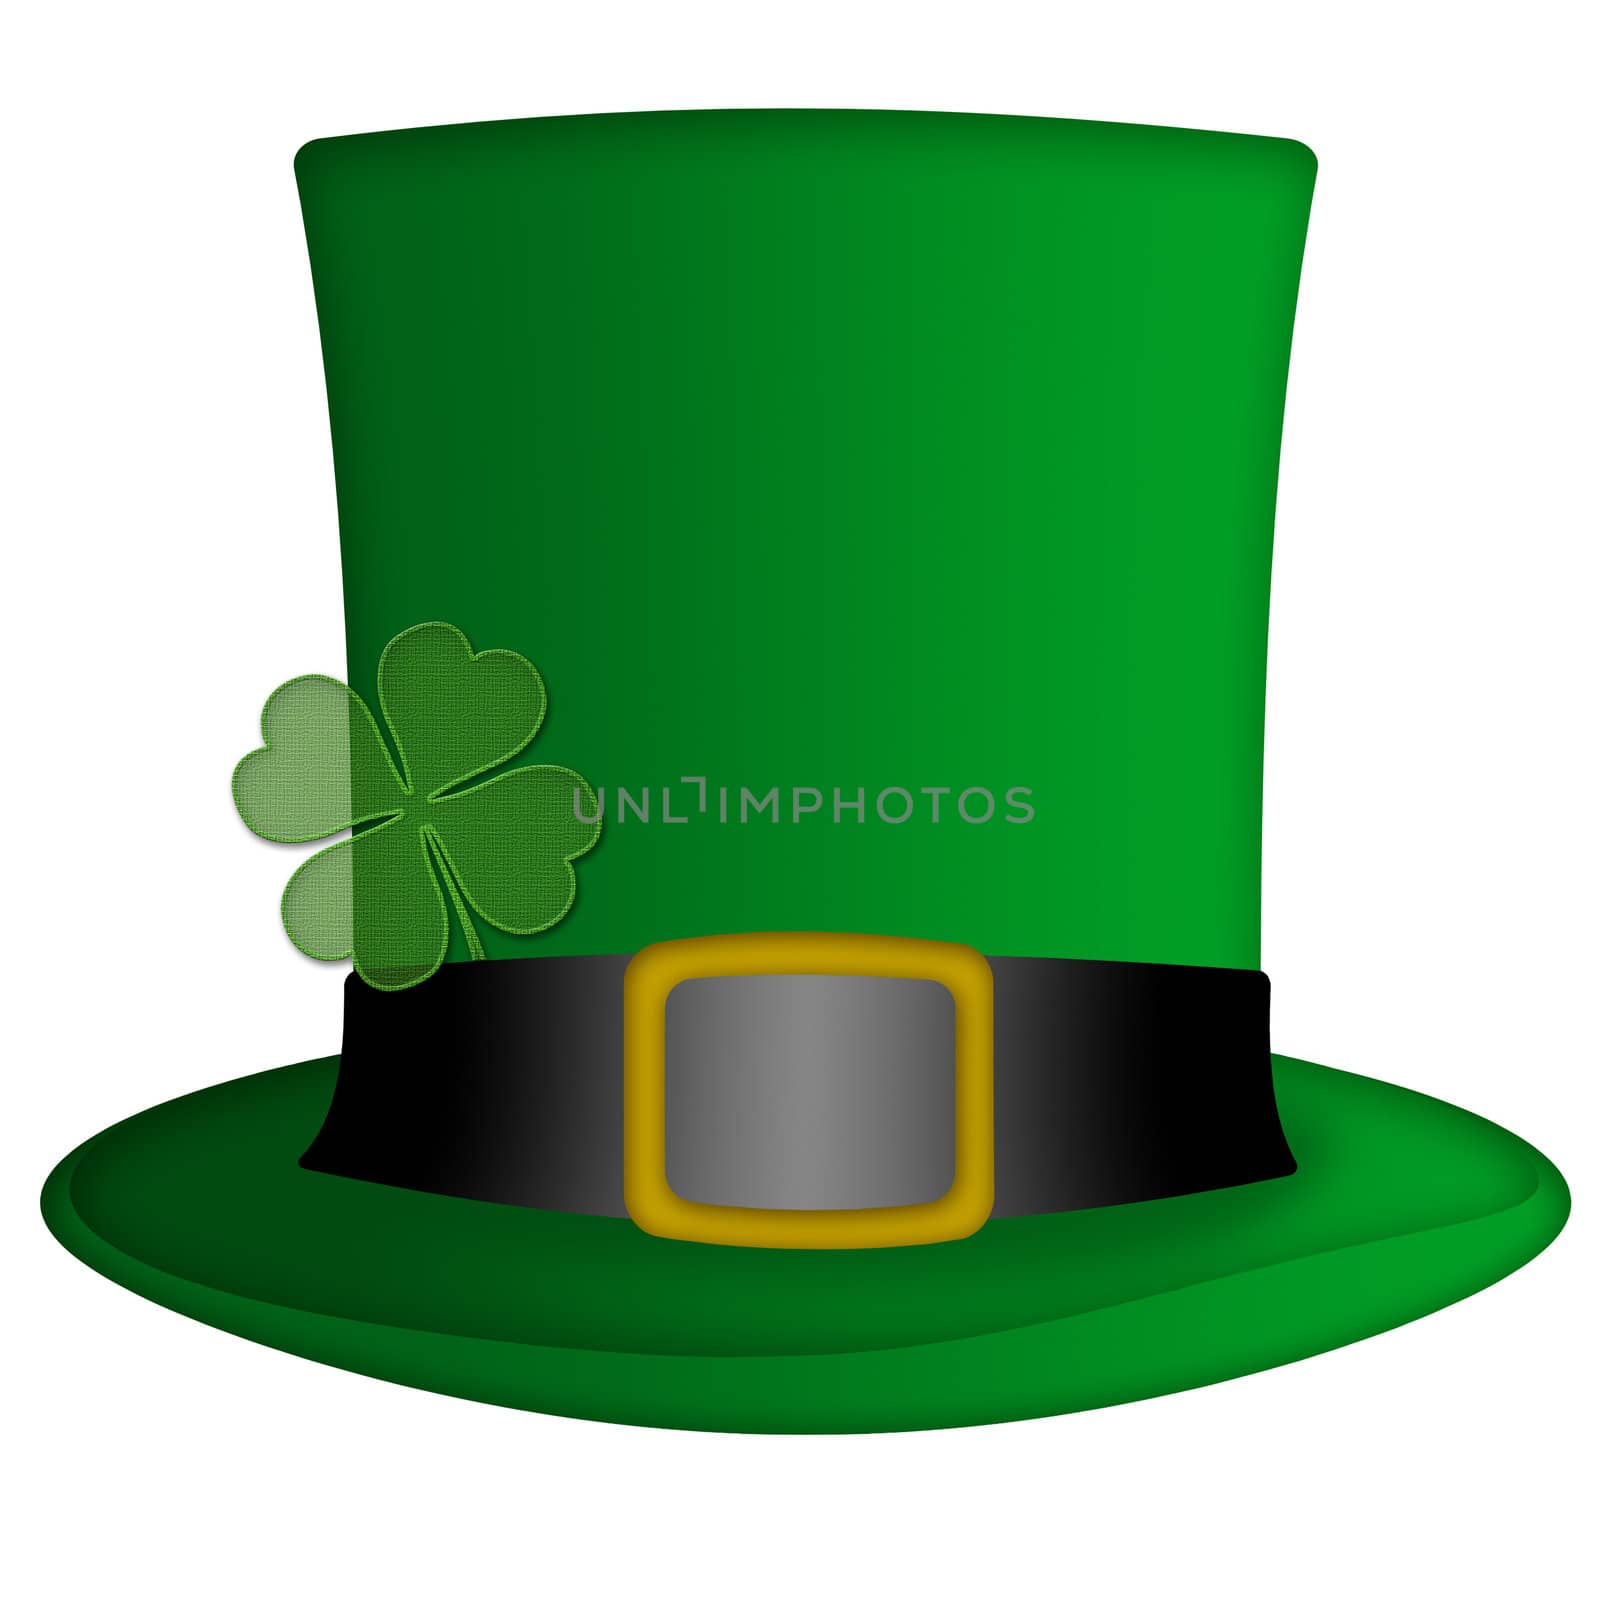 St Patricks Day Irish Leprechaun Hat Illustration